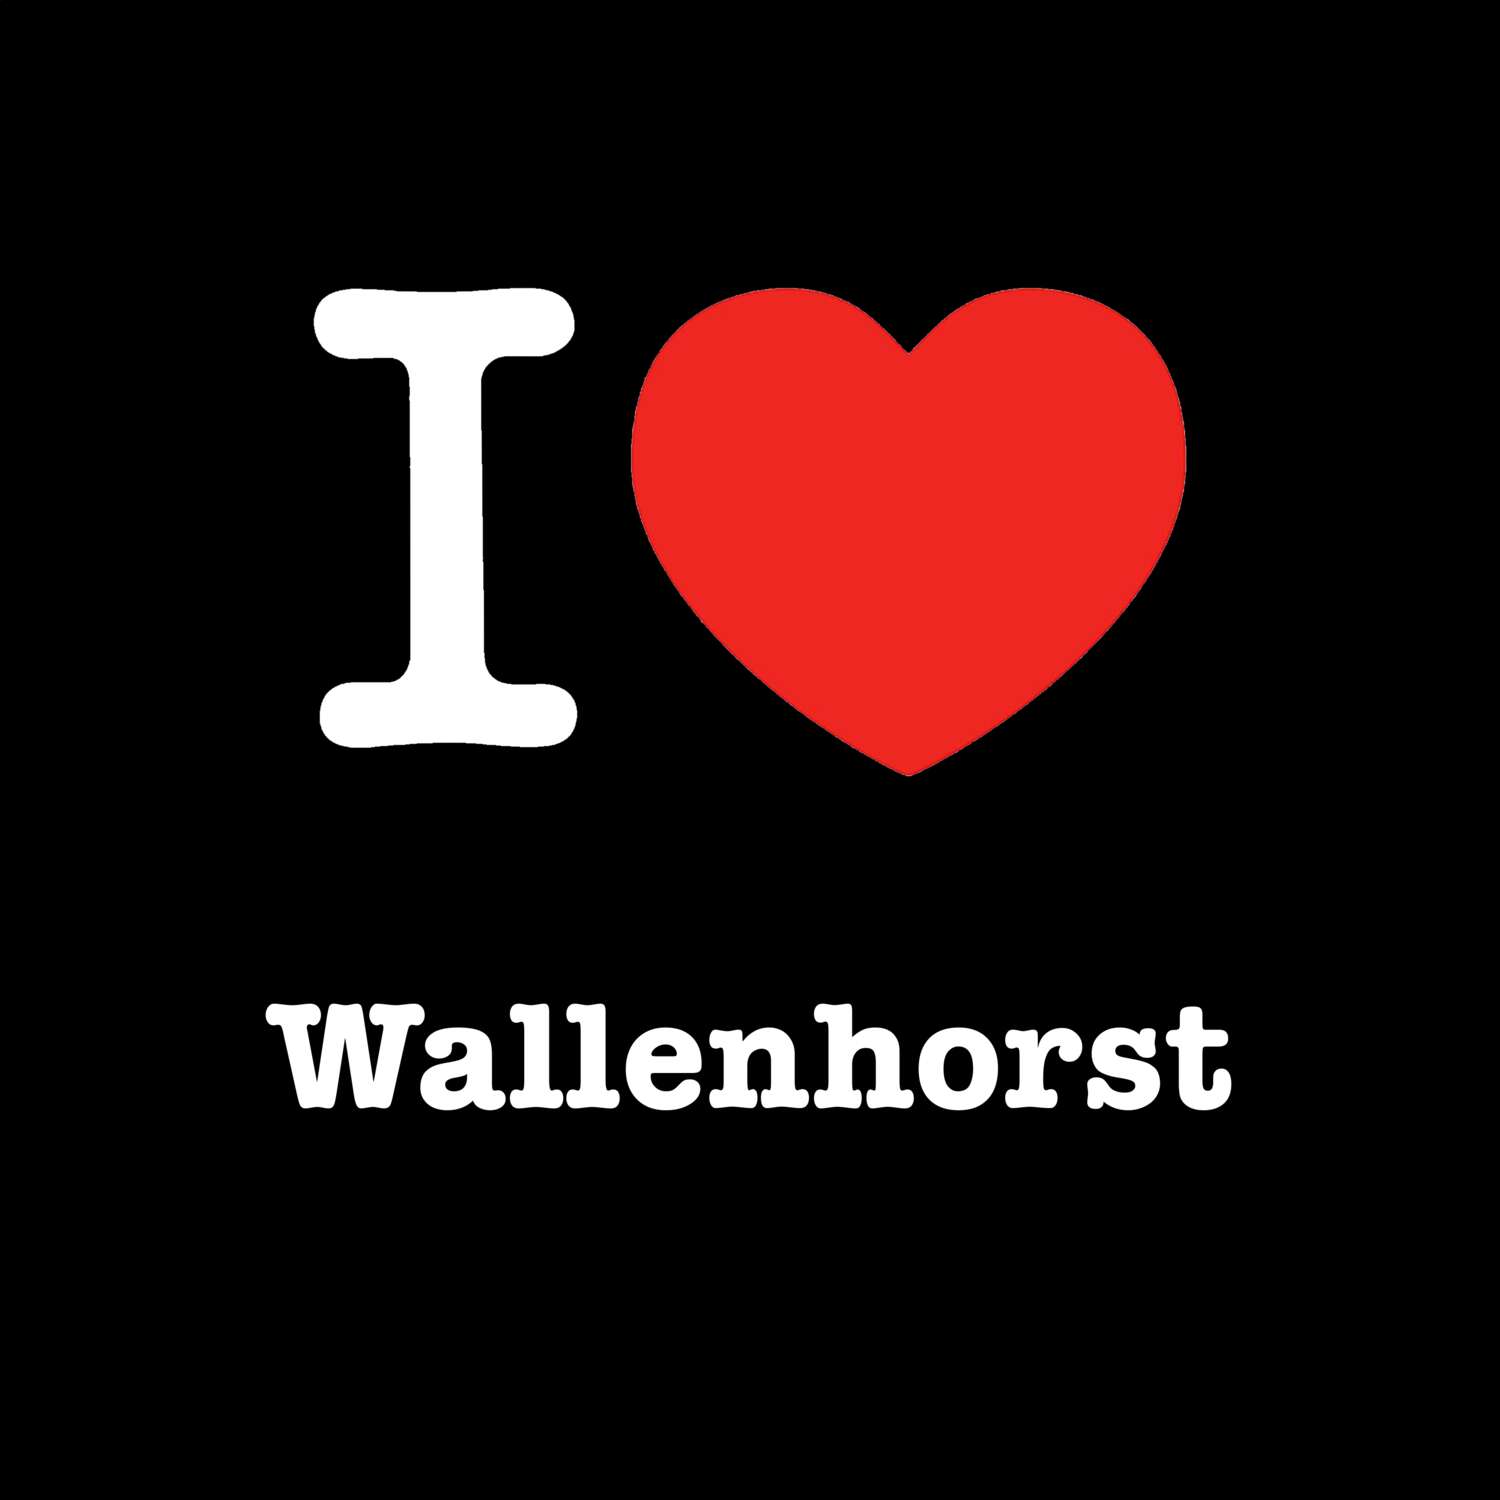 Wallenhorst T-Shirt »I love«